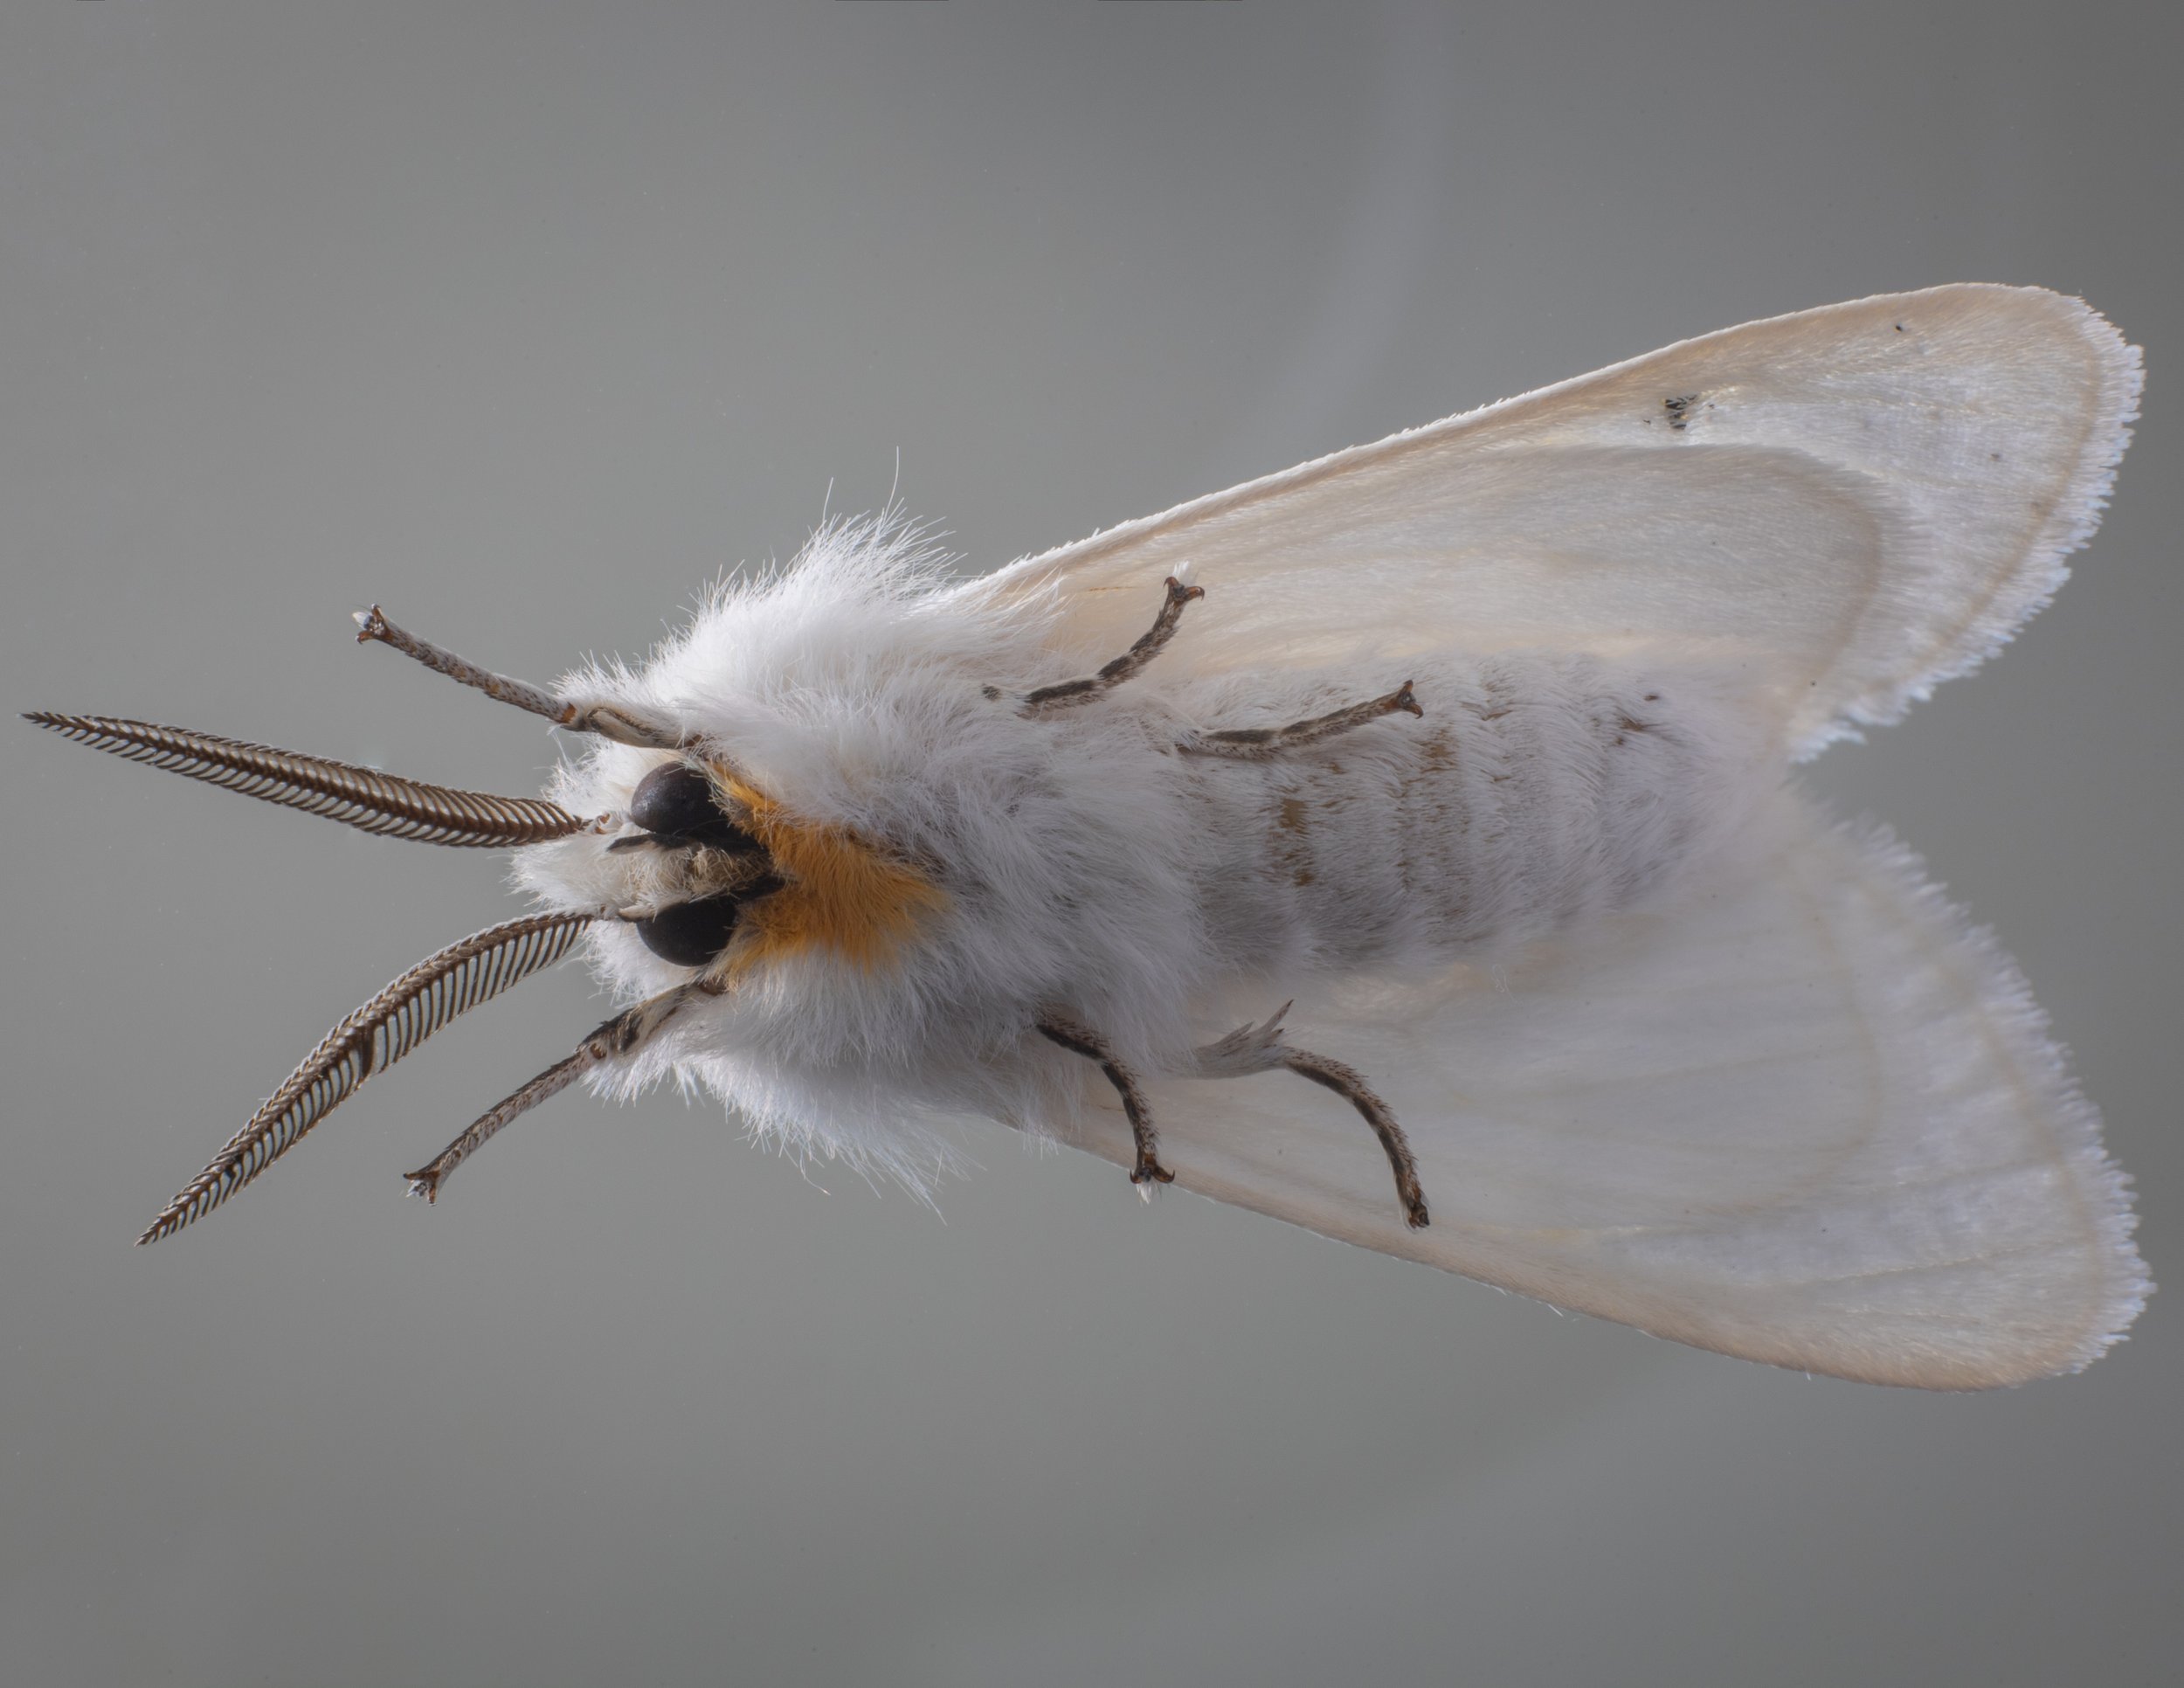 NoPests Pantry Moth Trap - NoPests